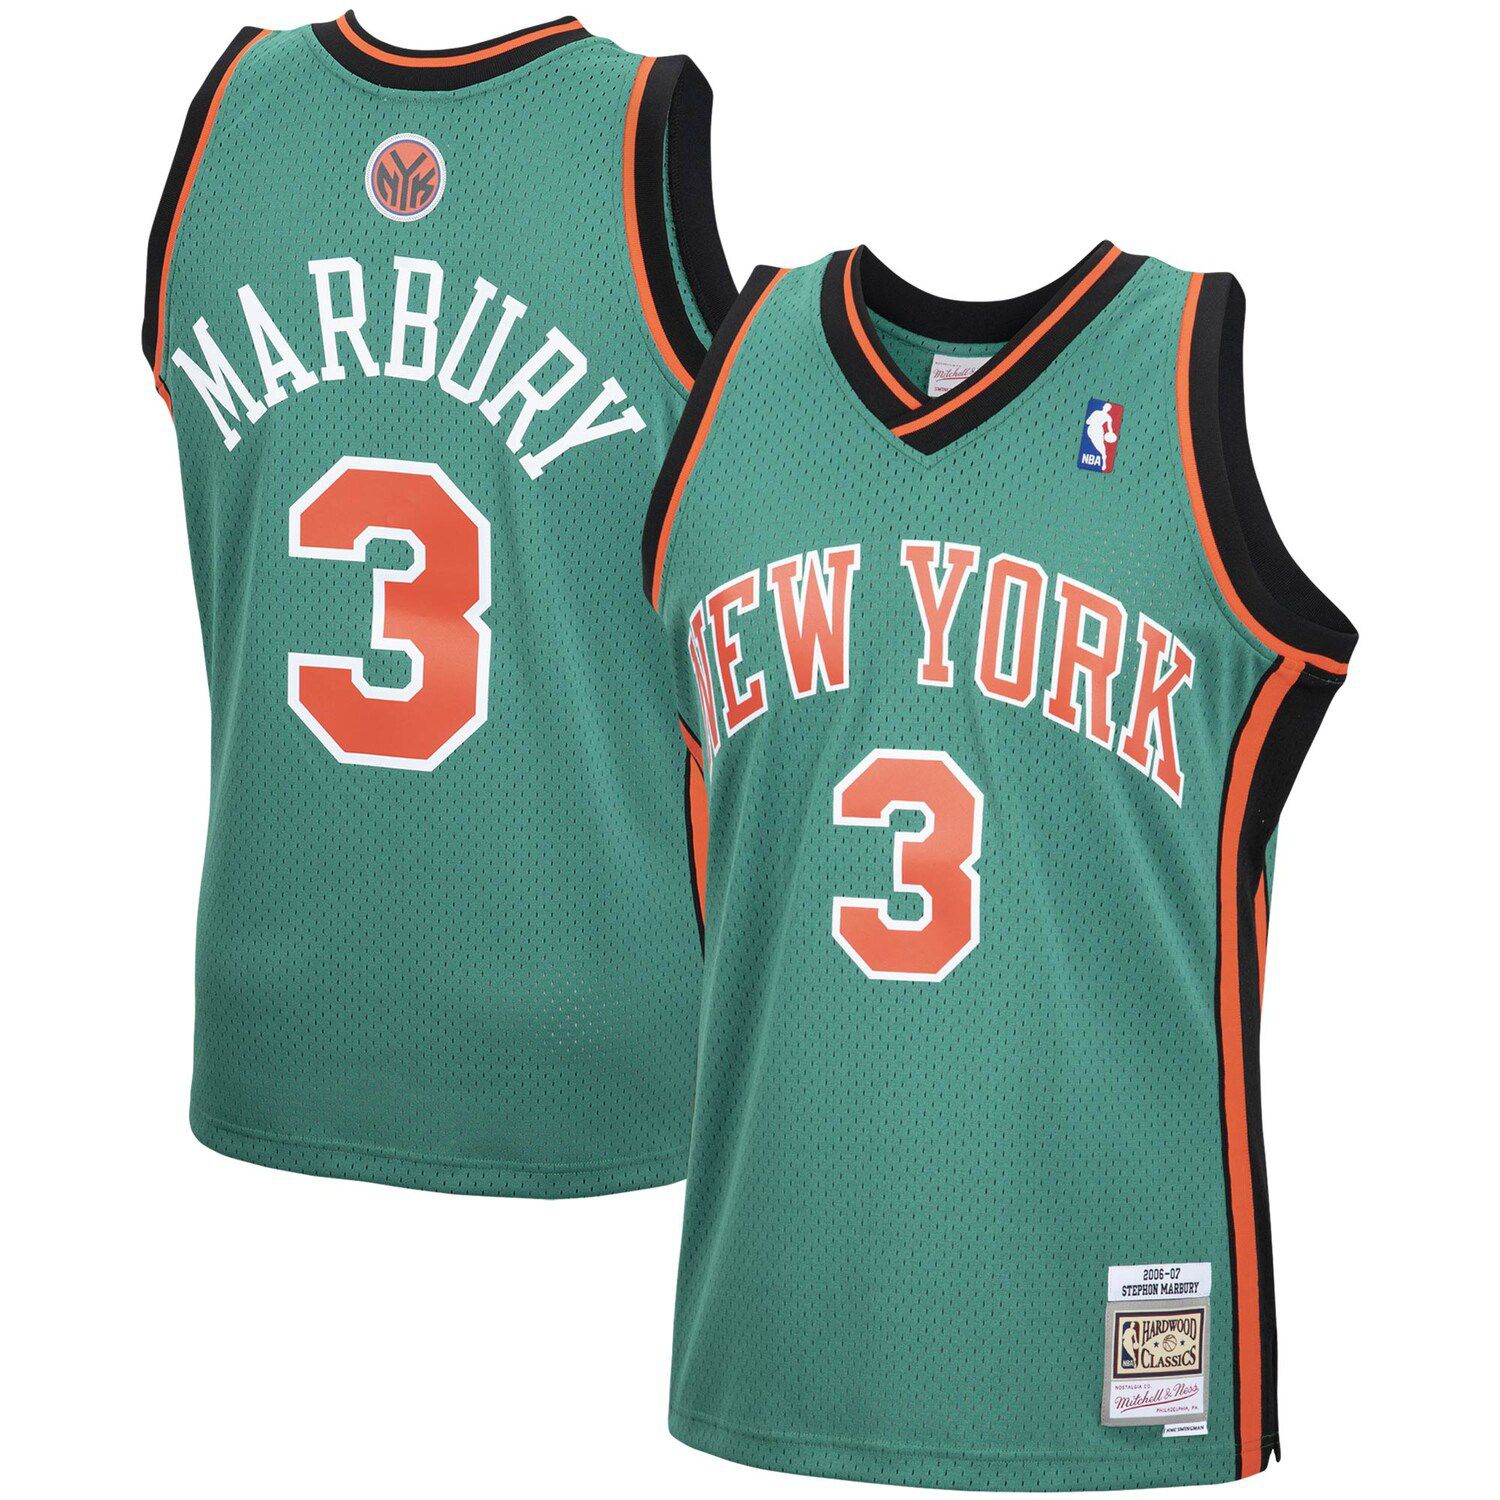 Stephon Marbury 3 New York Knicks 2005-06 Mitchell & Ness Road